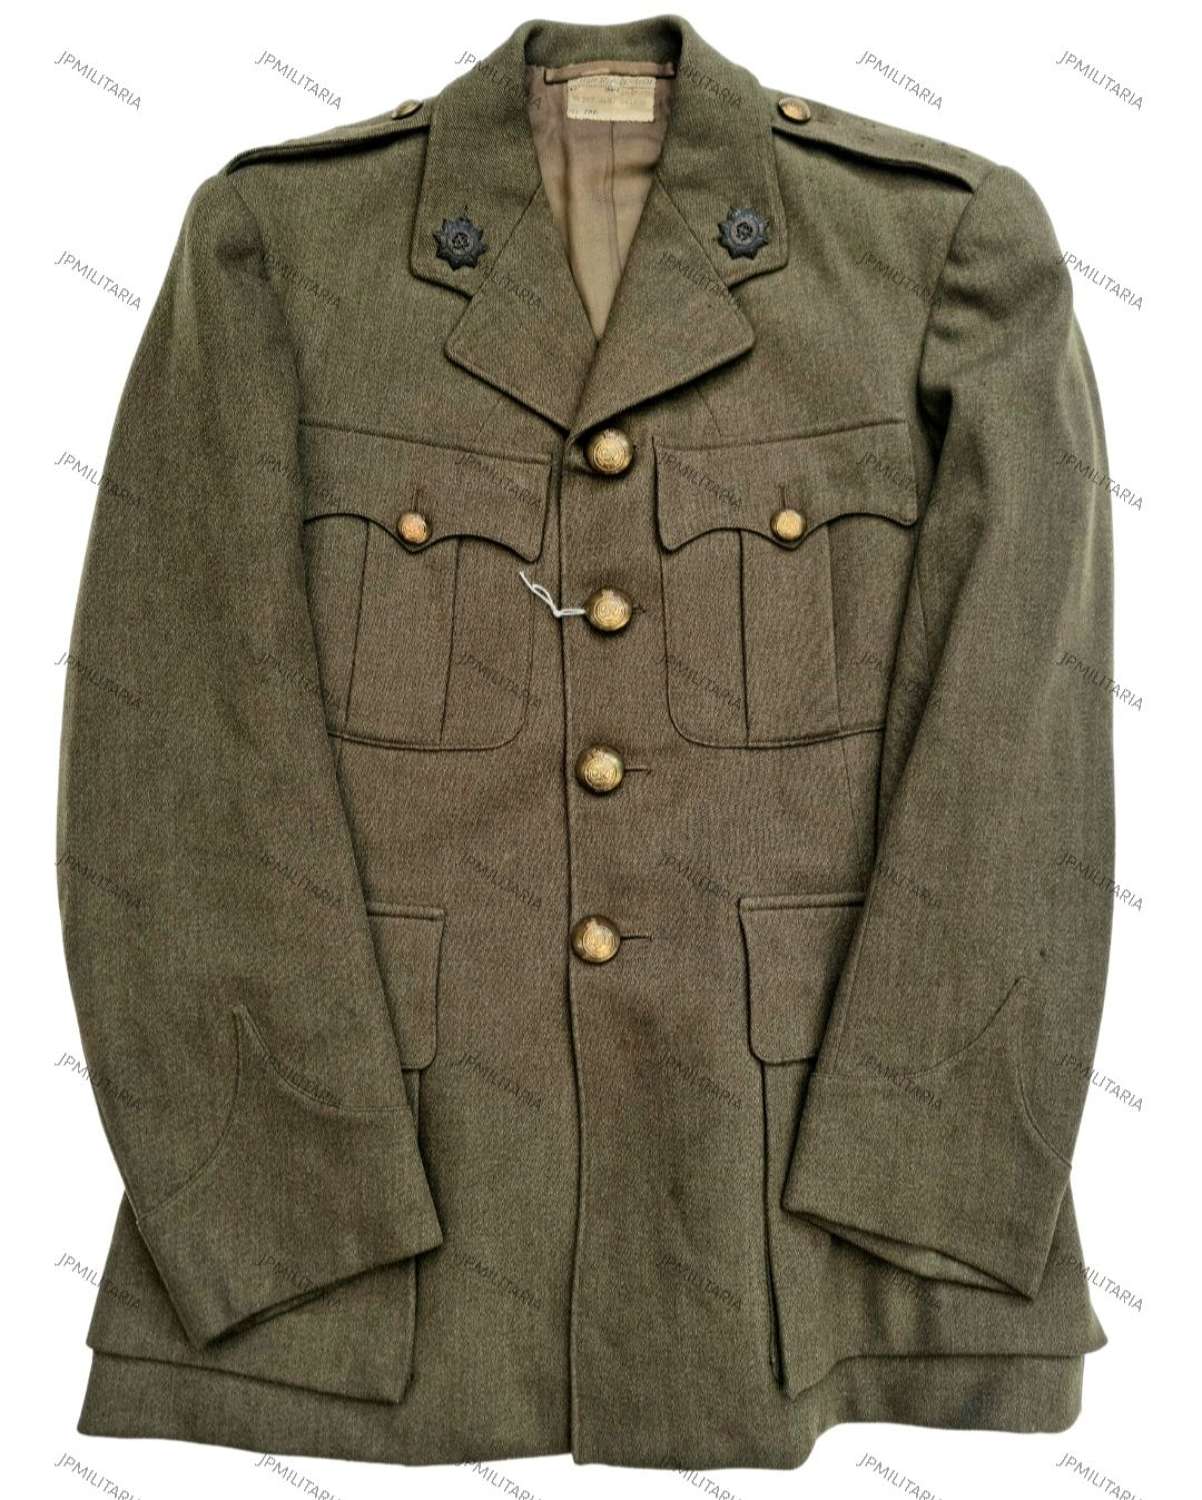 WW2 Royal Army Service Corps uniform